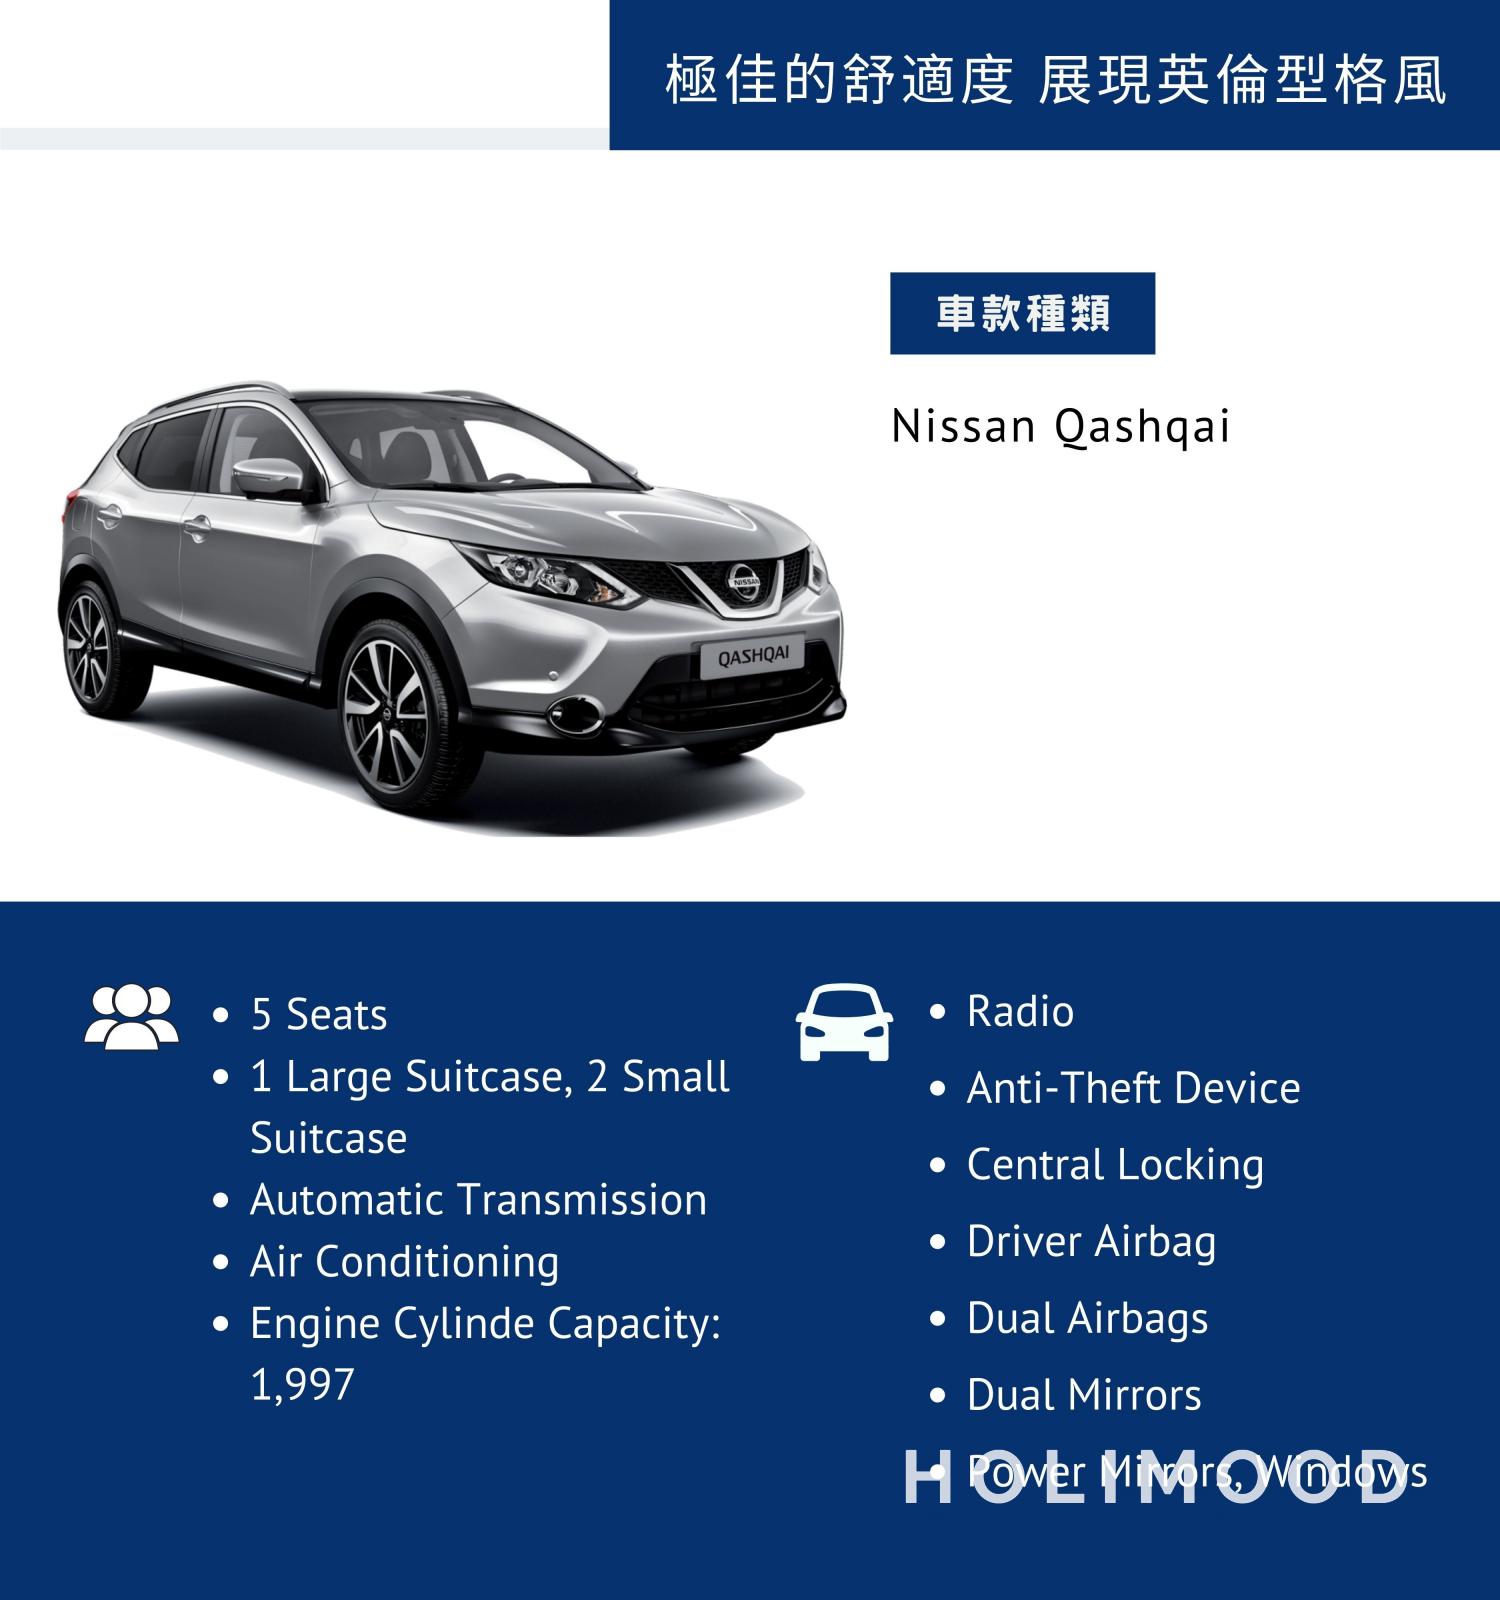 DCH Mobility Car Rent x Holimood Promotion 【五年內新車】Nissan Qashqai - 務實慳油5人車 (日租) 2